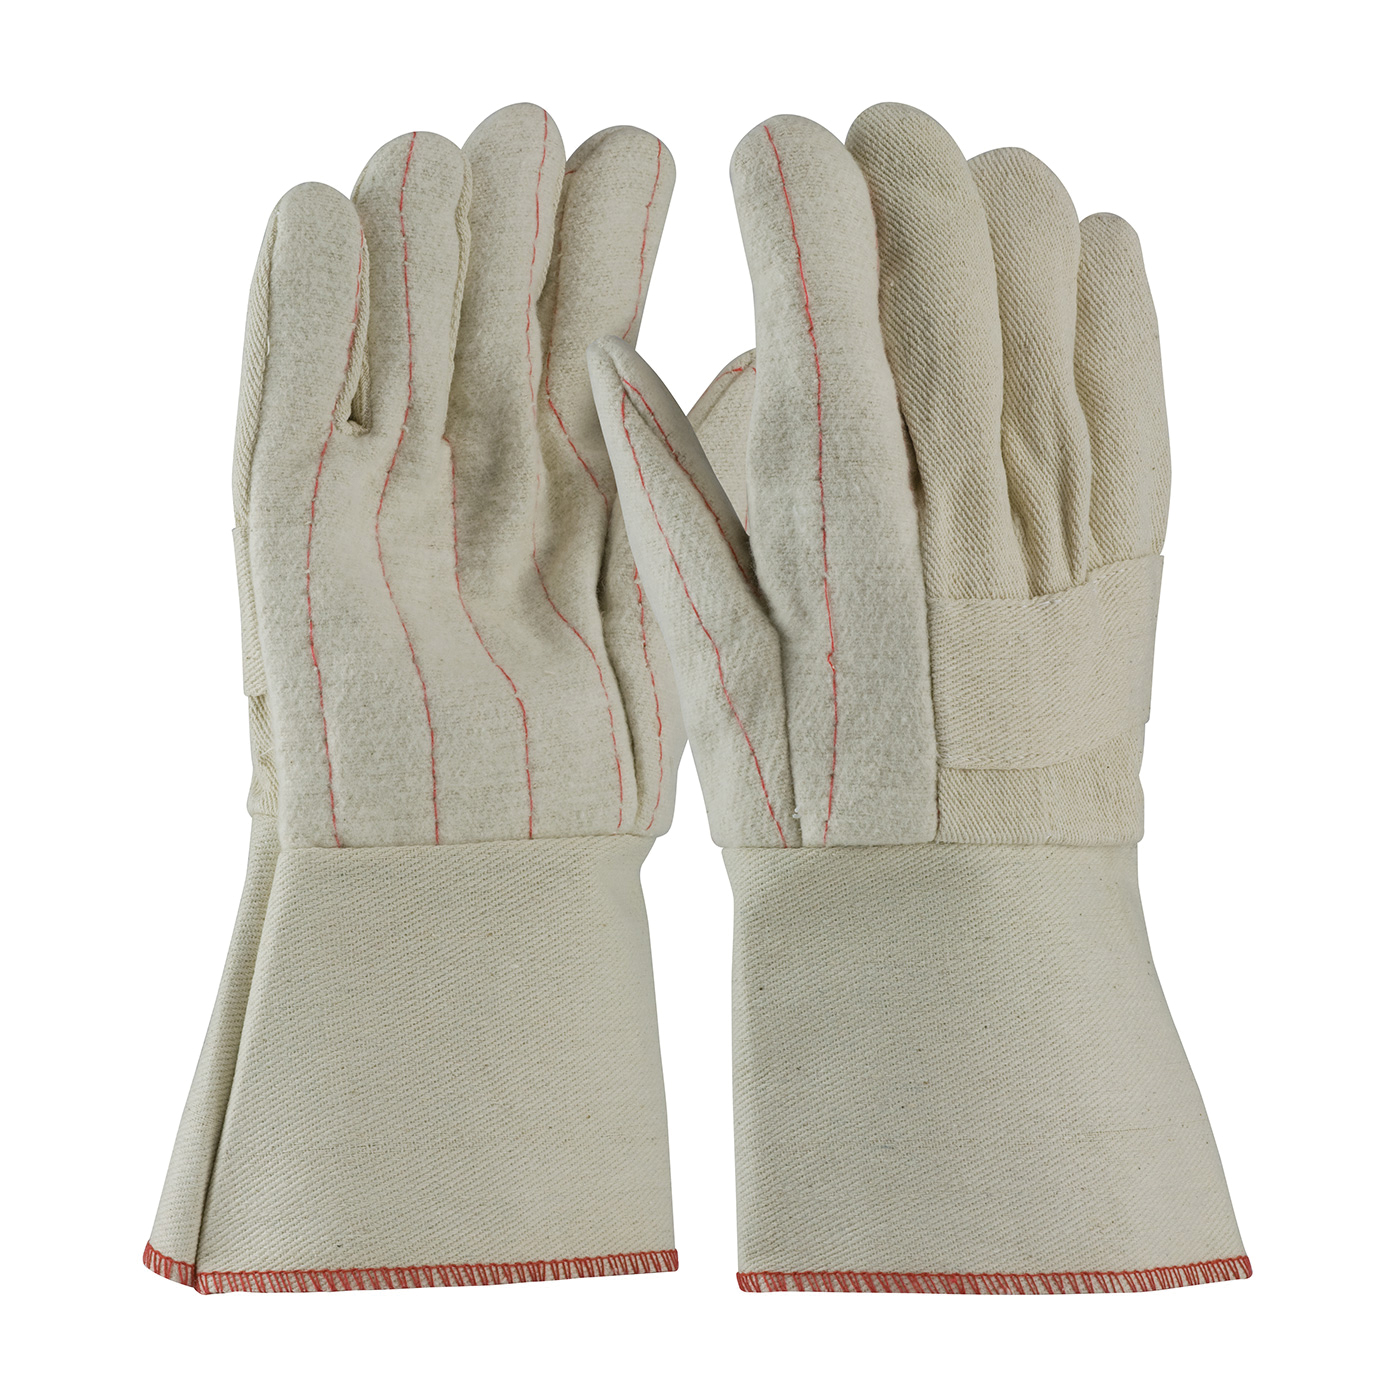 PIP® 94-932G Men's Premium Grade Hot Mill Gloves, Universal, Cotton/Canvas, Natural, Burlap/Cotton, Gauntlet Cuff, 12.7 in L